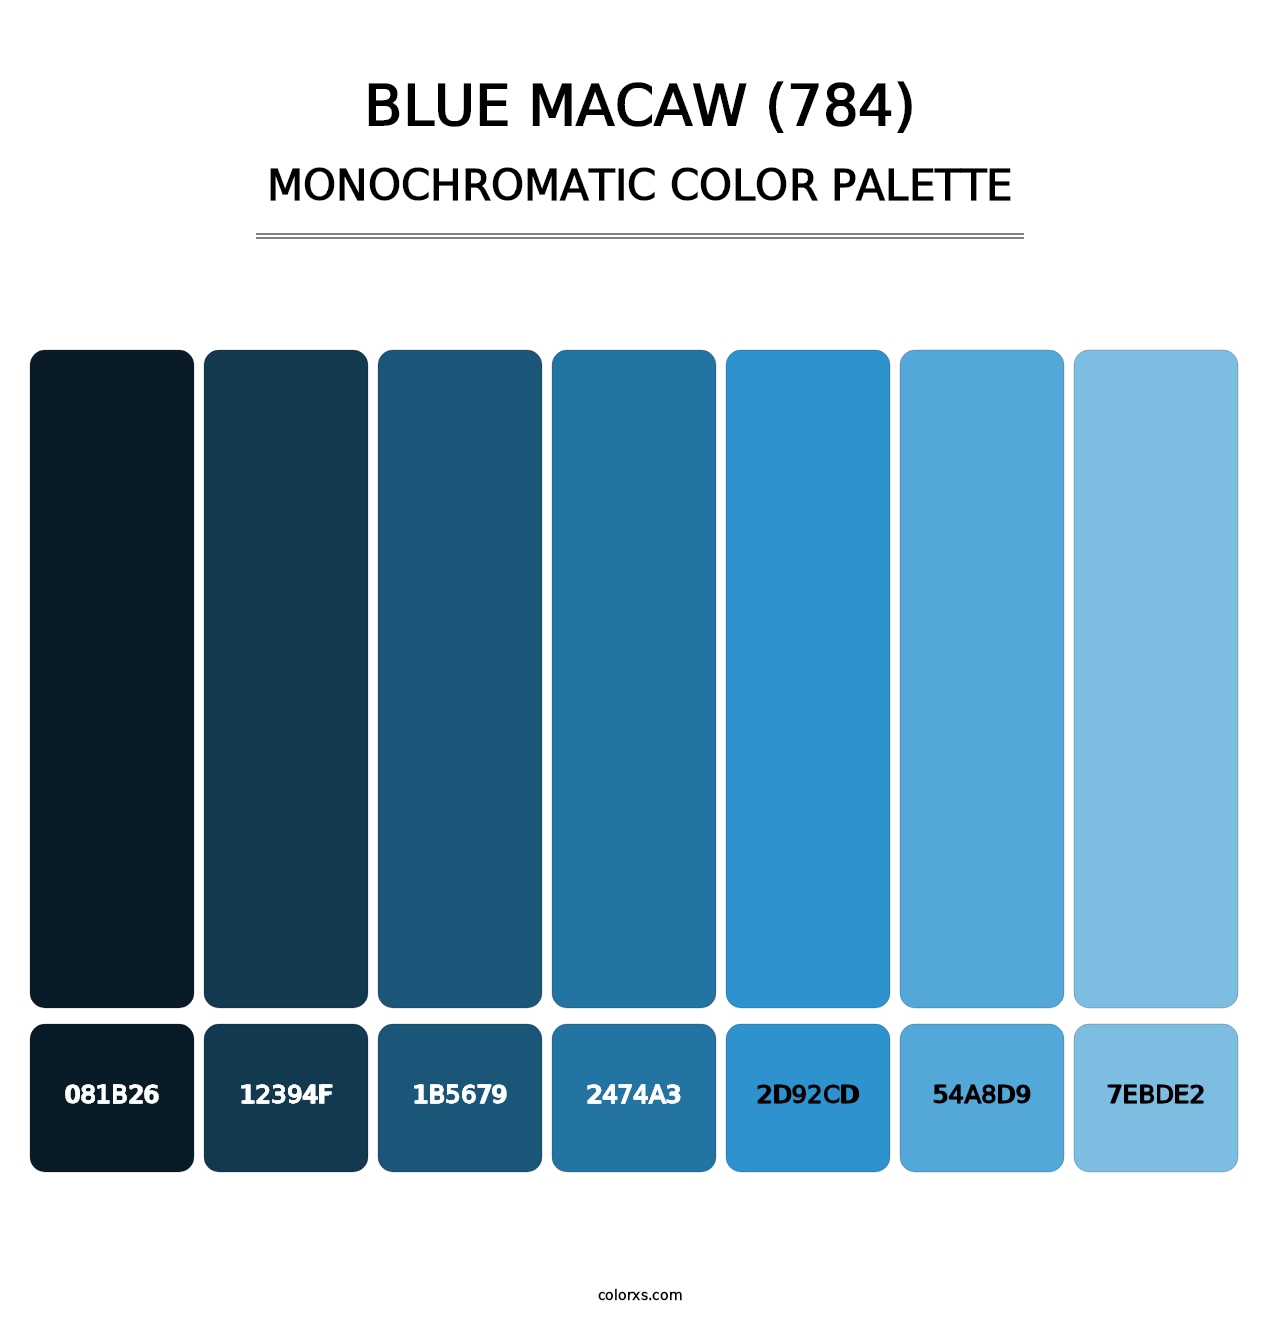 Blue Macaw (784) - Monochromatic Color Palette